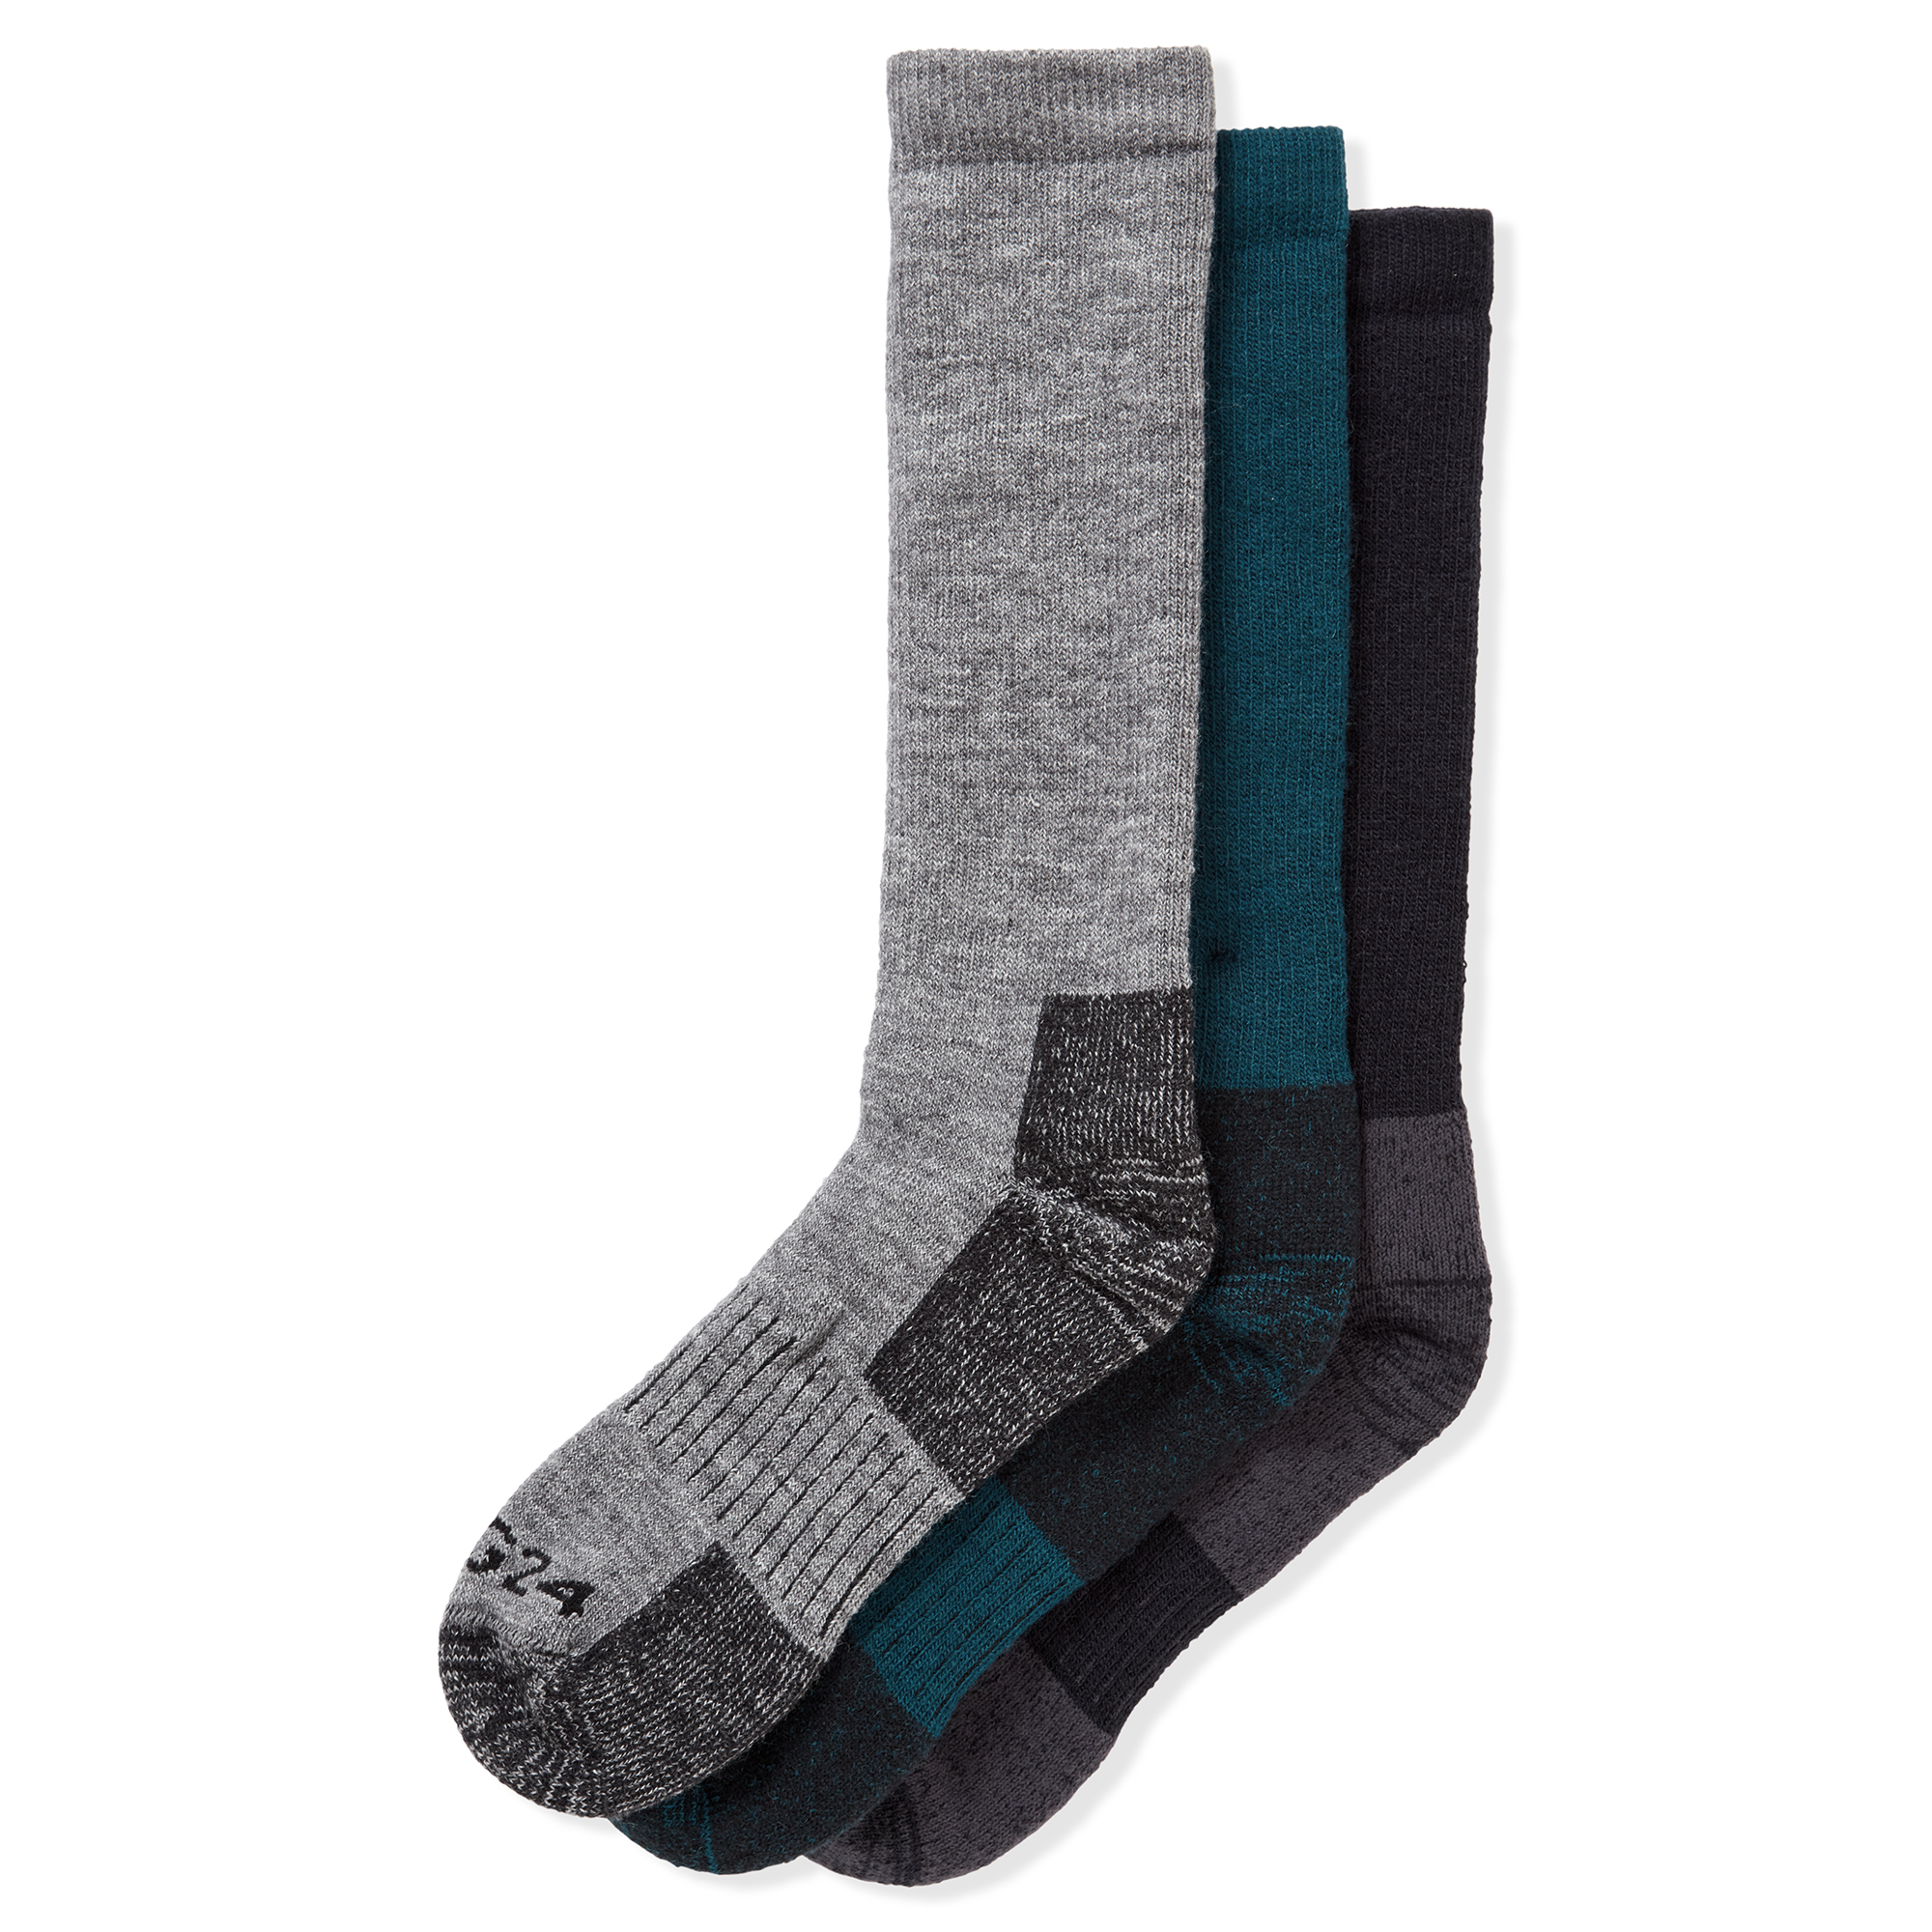 TOG24 Rigton Merino Trail Socks 3 Pack Multipack Hiking Walking Wool ...